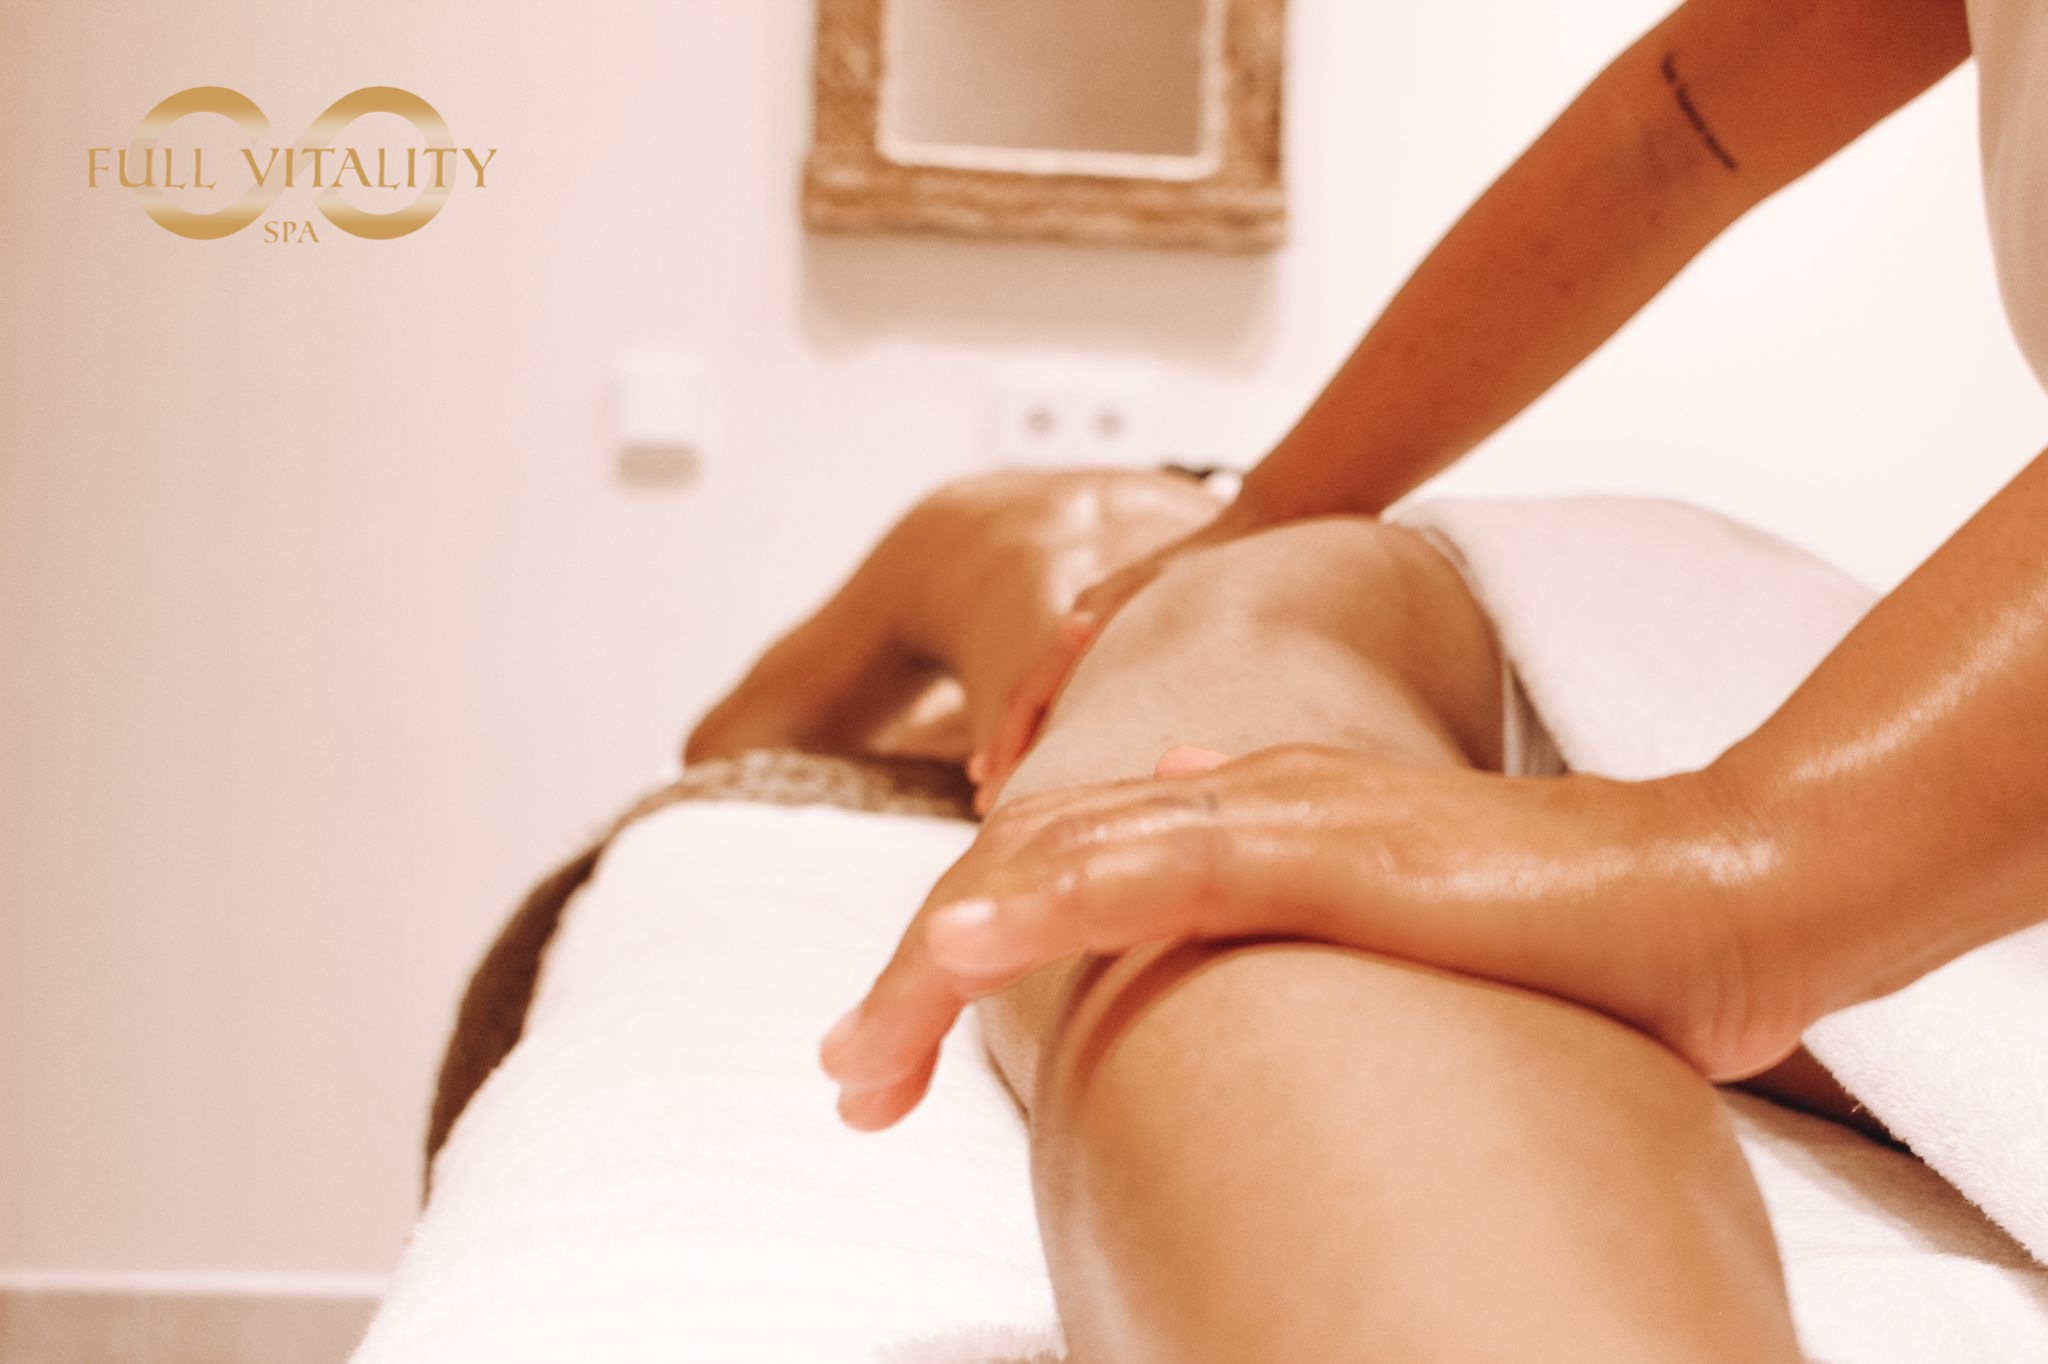 Marbella reducing massage (lymphatic drainage)